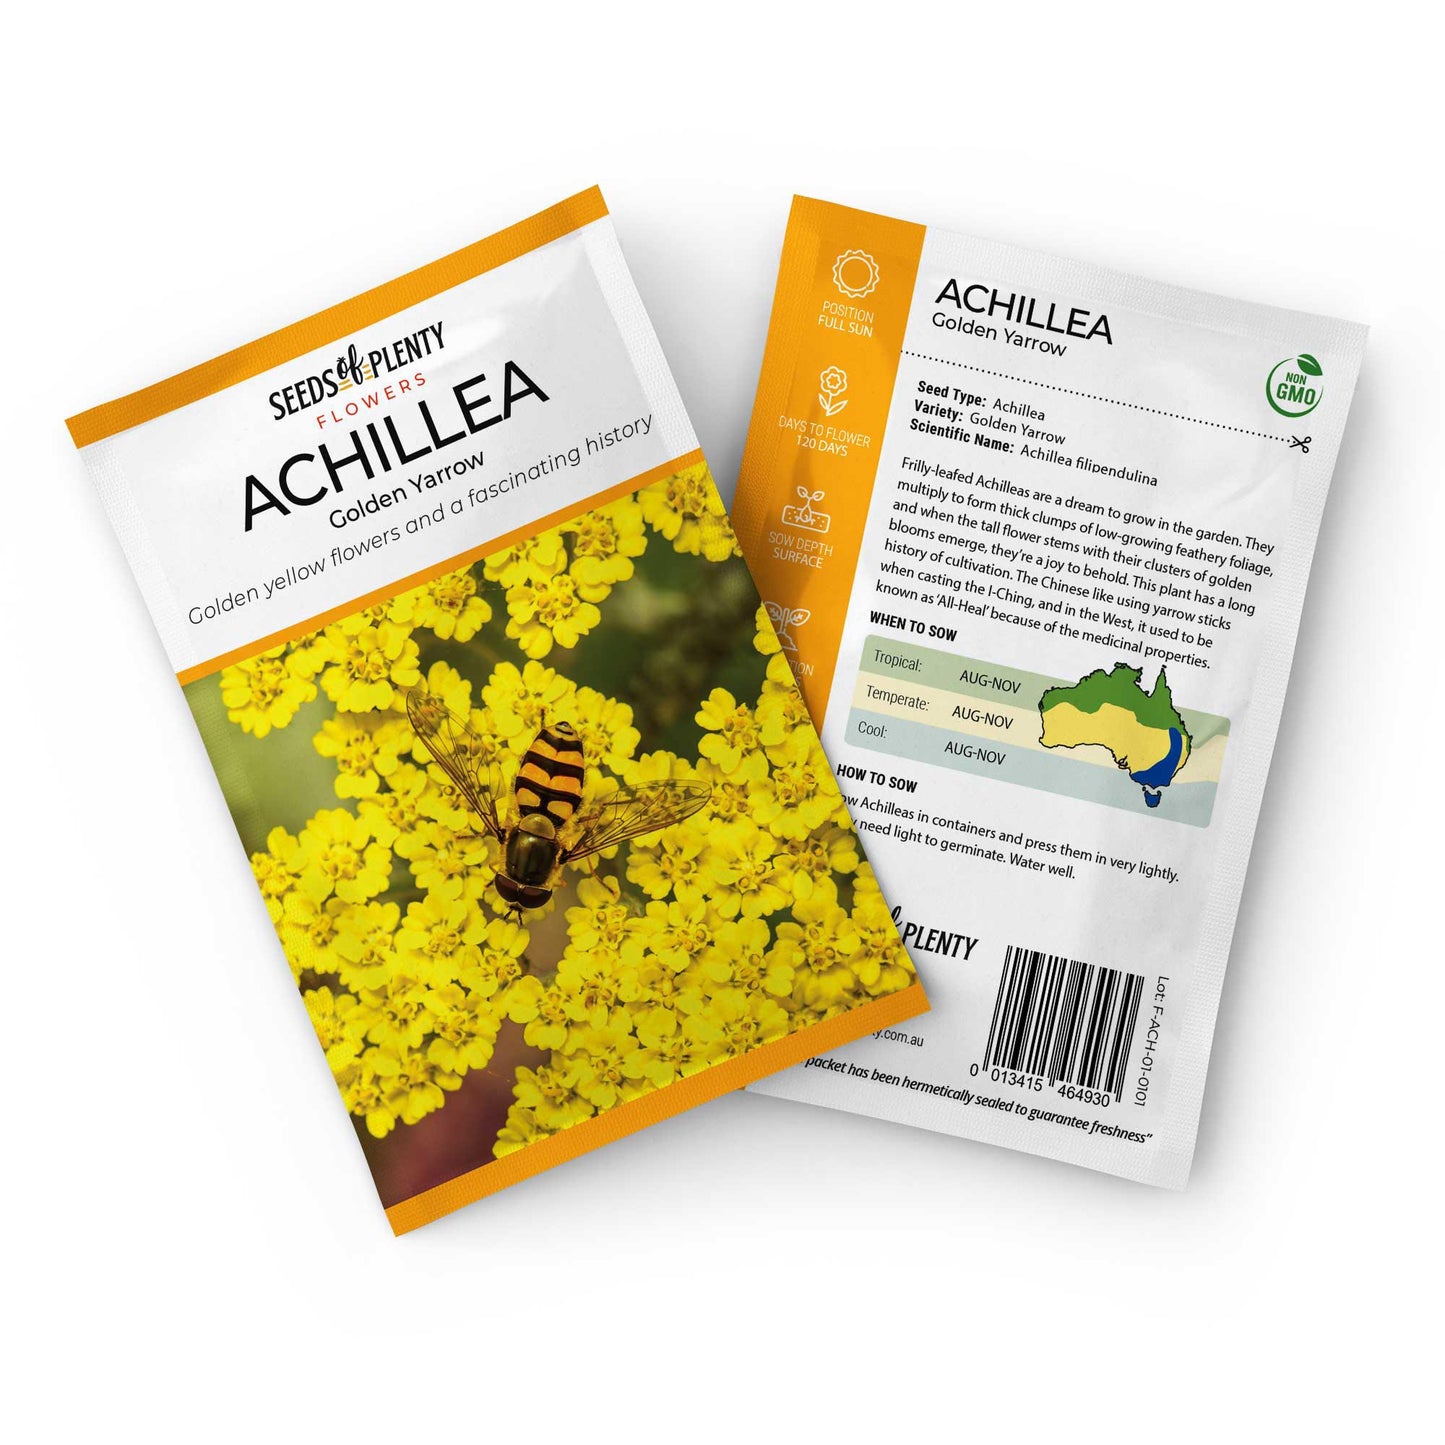 ACHILLEA - Golden Yarrow Seed Packet - Achillea filipendulina